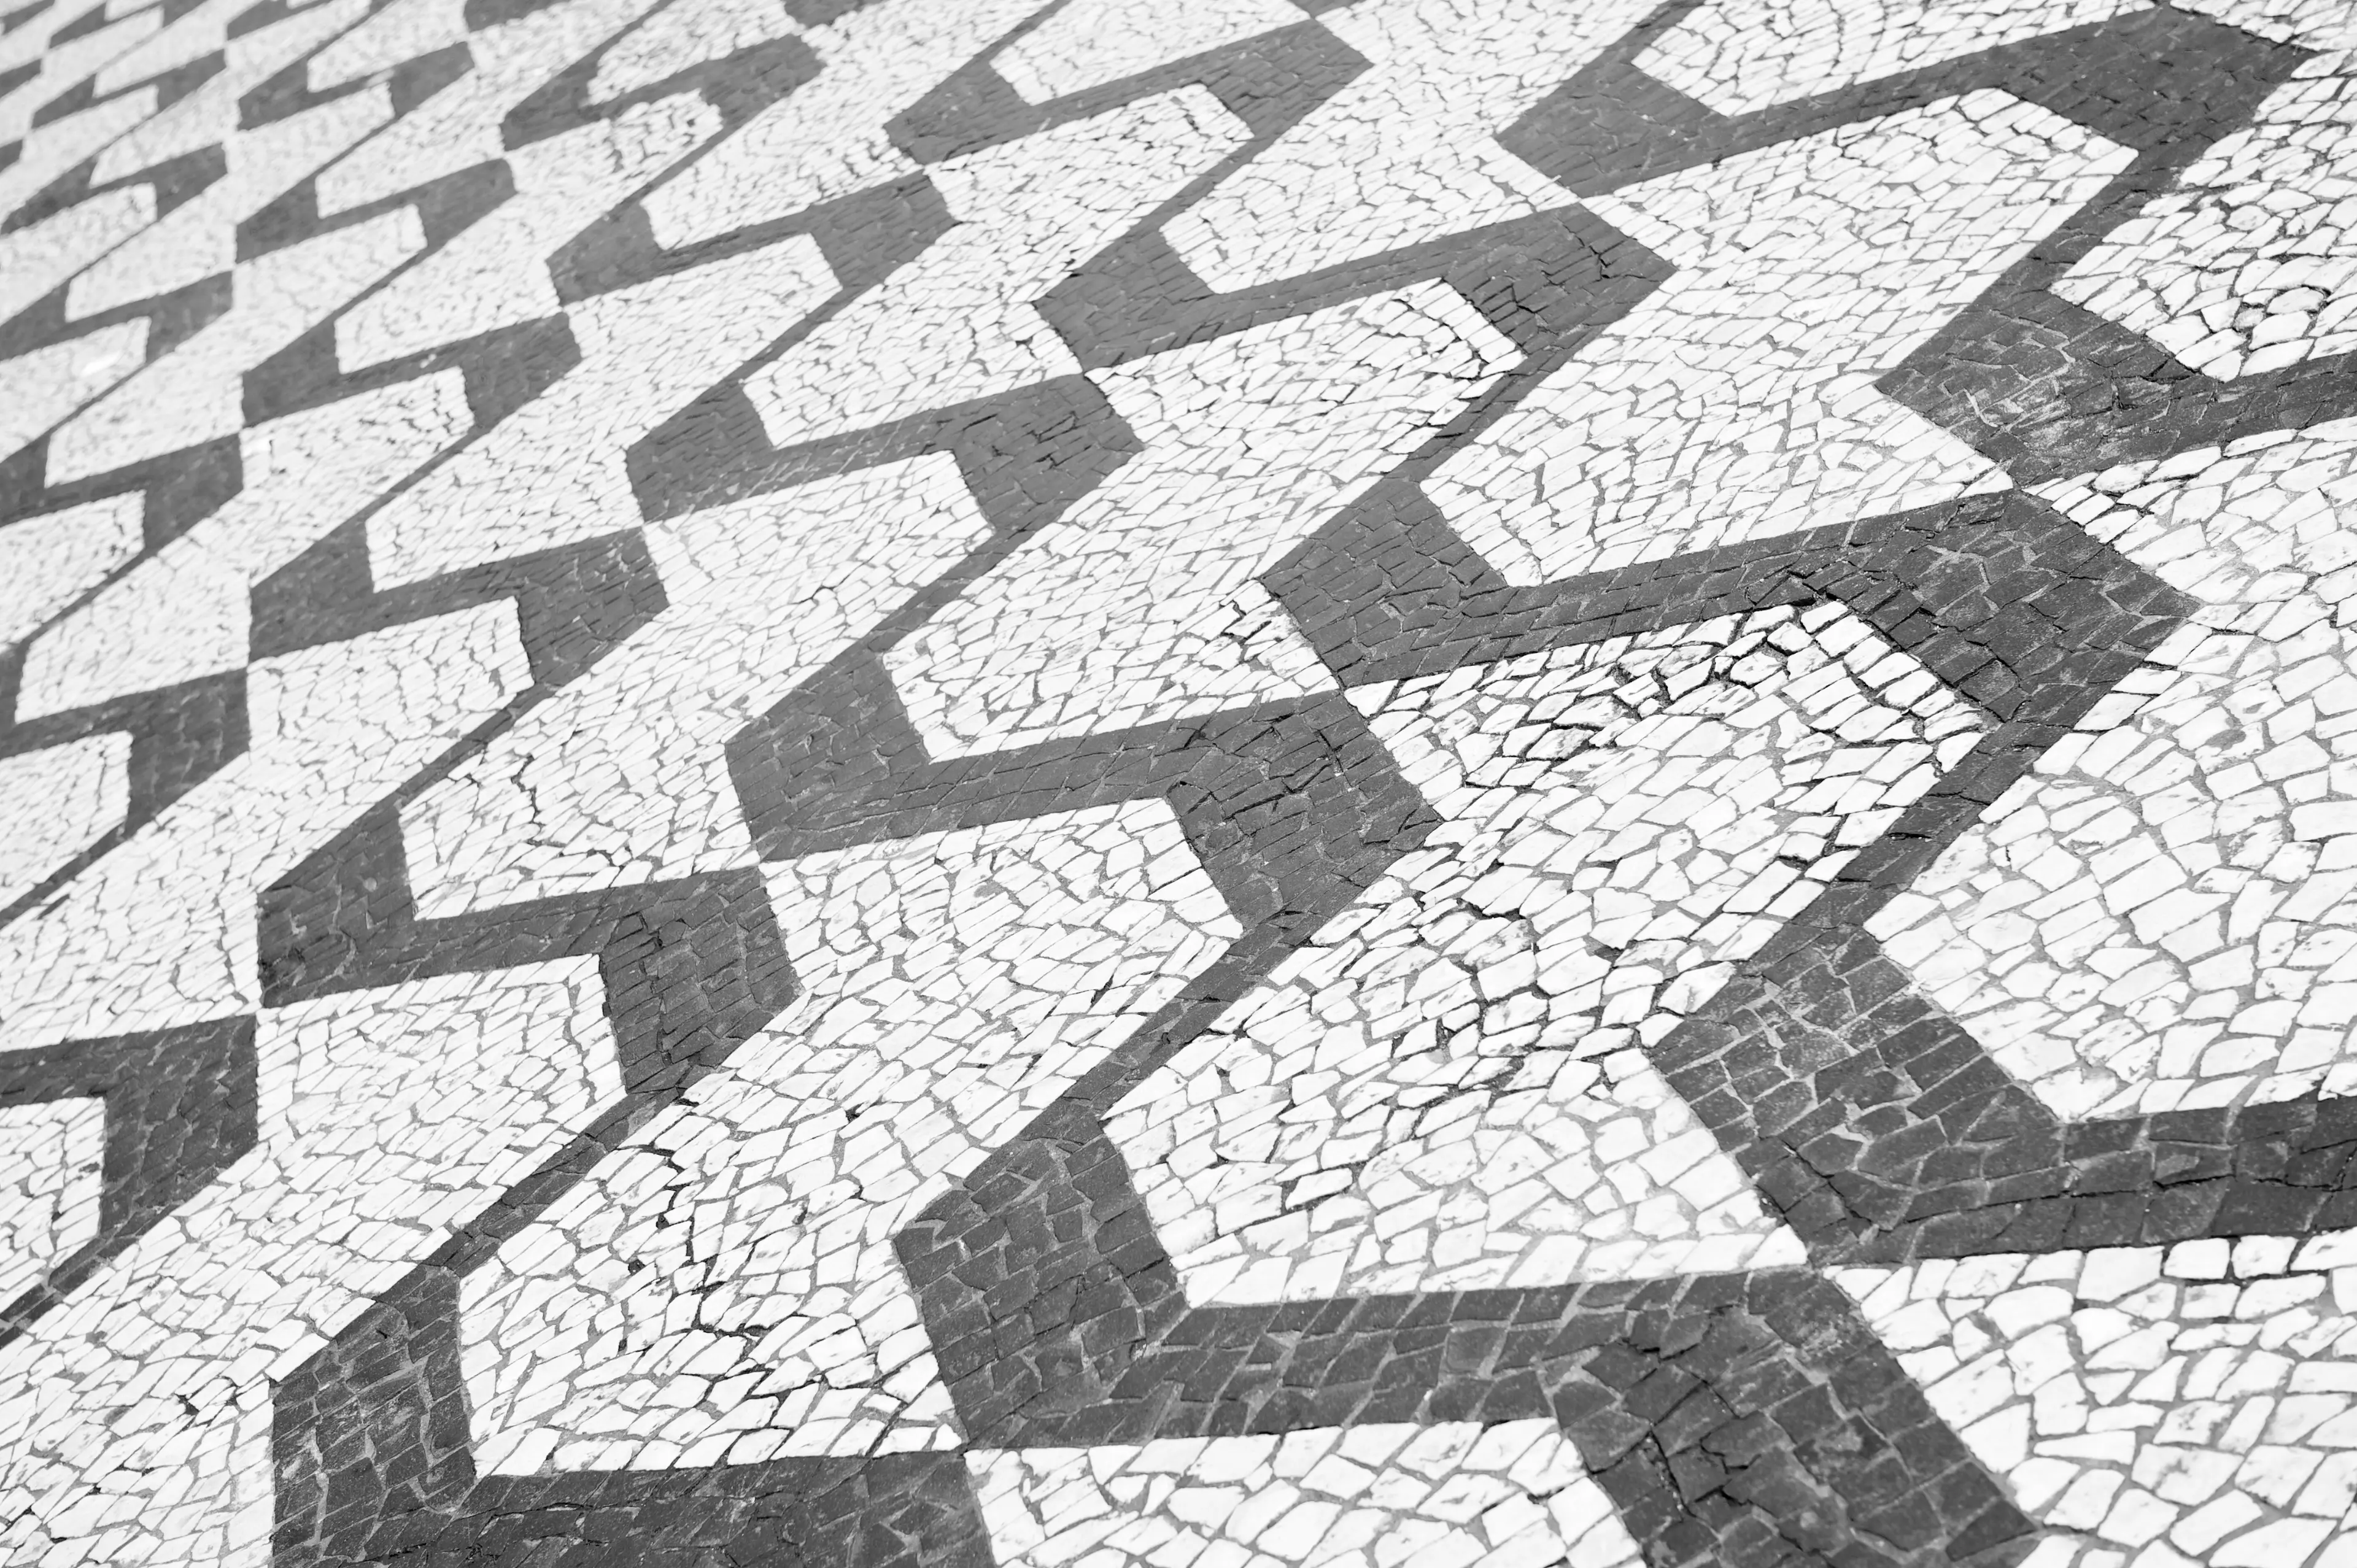 The classic sidewalk pattern of Sao Paulo